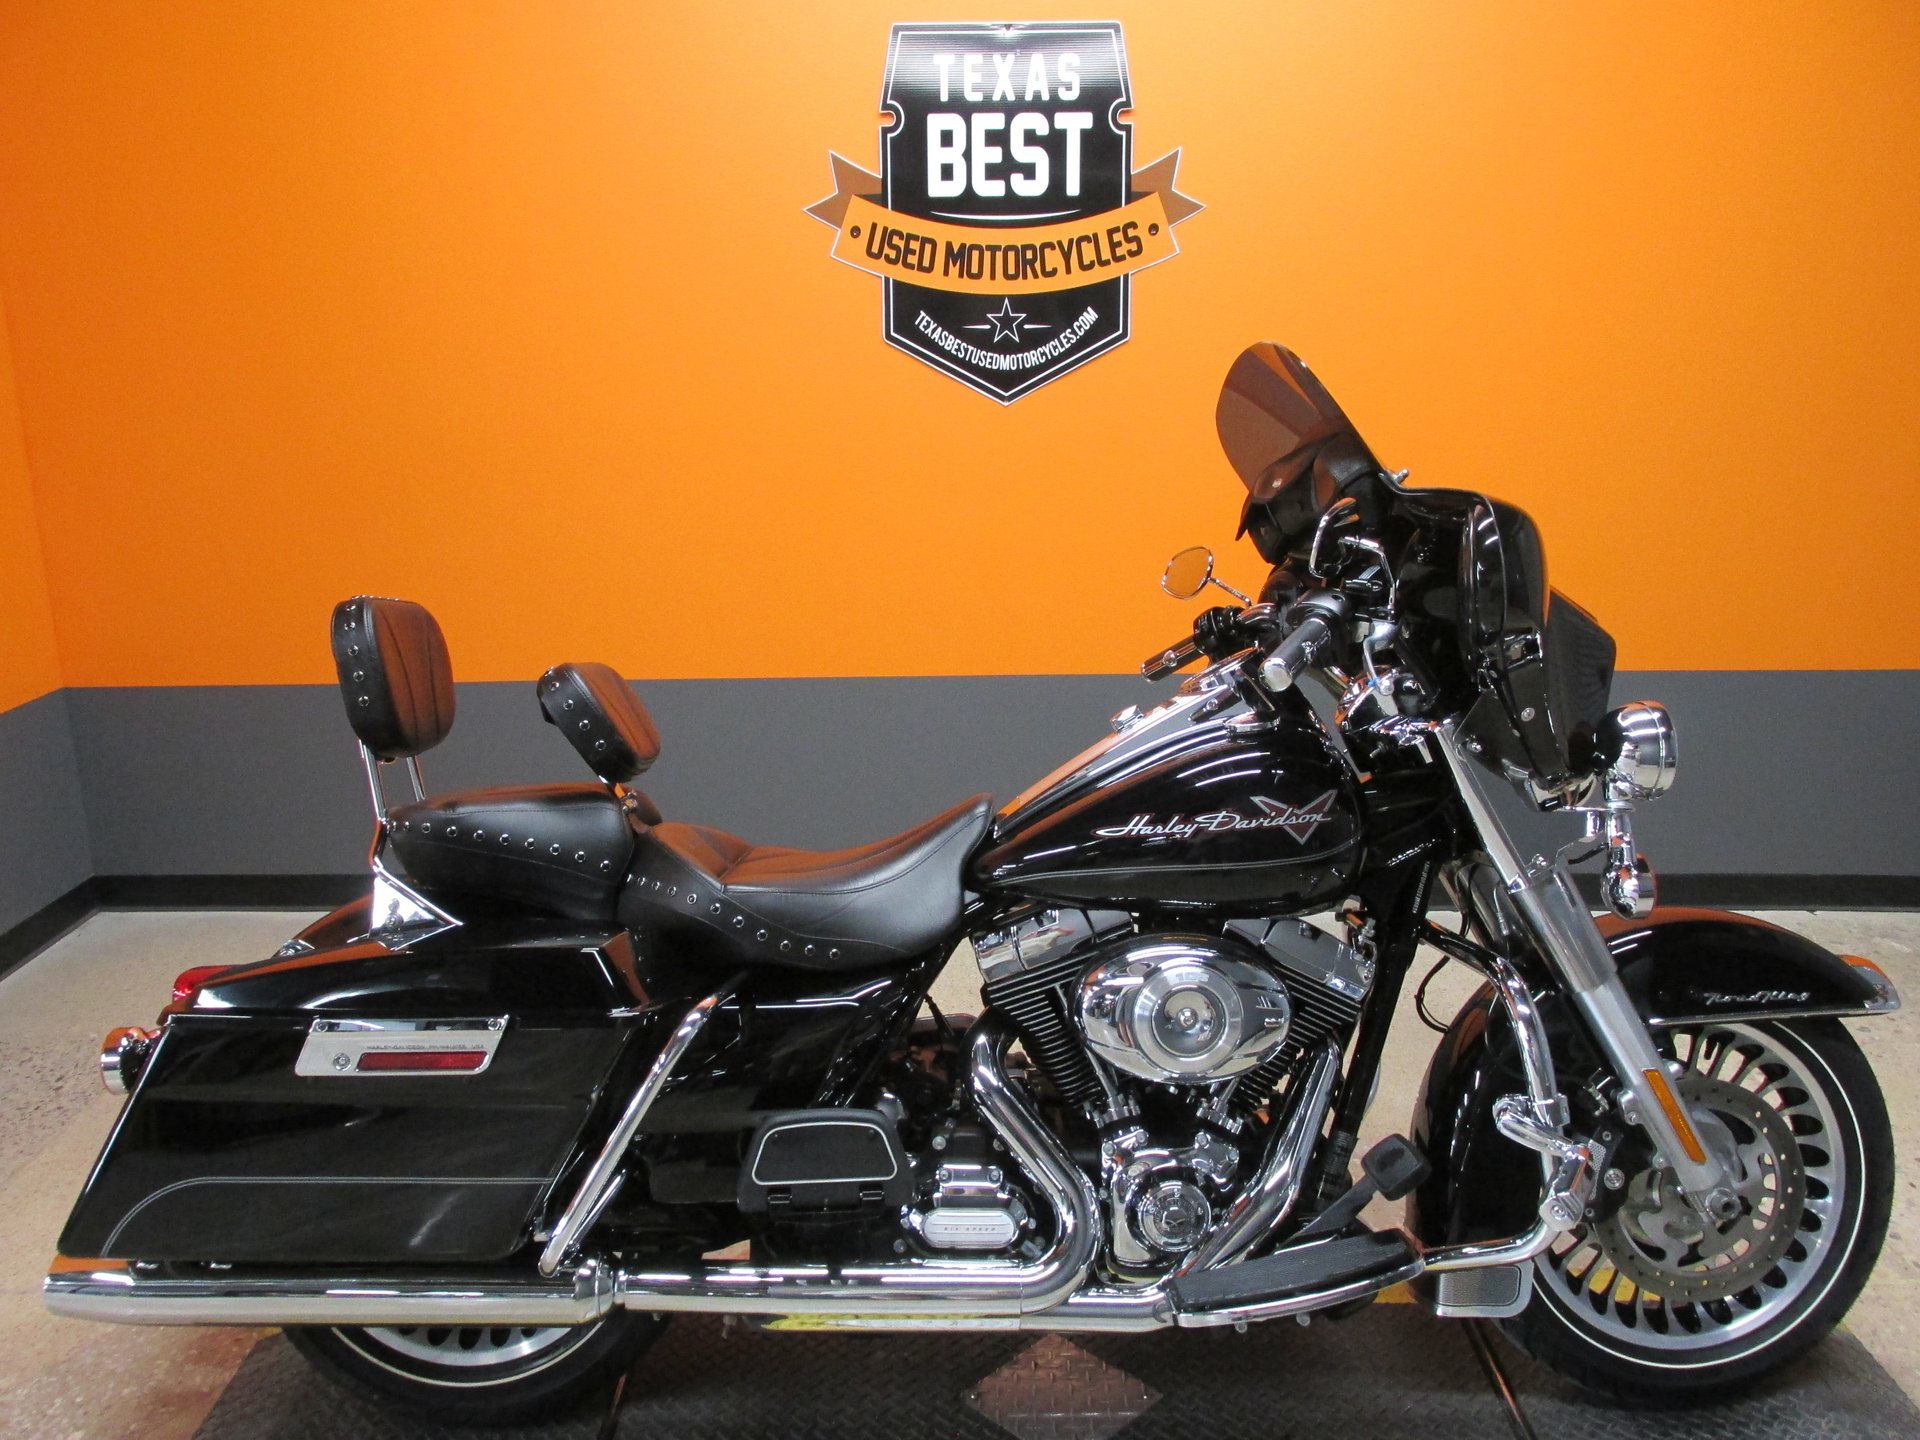 2012 Harley Davidson Road King American Motorcycle Trading Company Used Harley Davidson Motorcycles